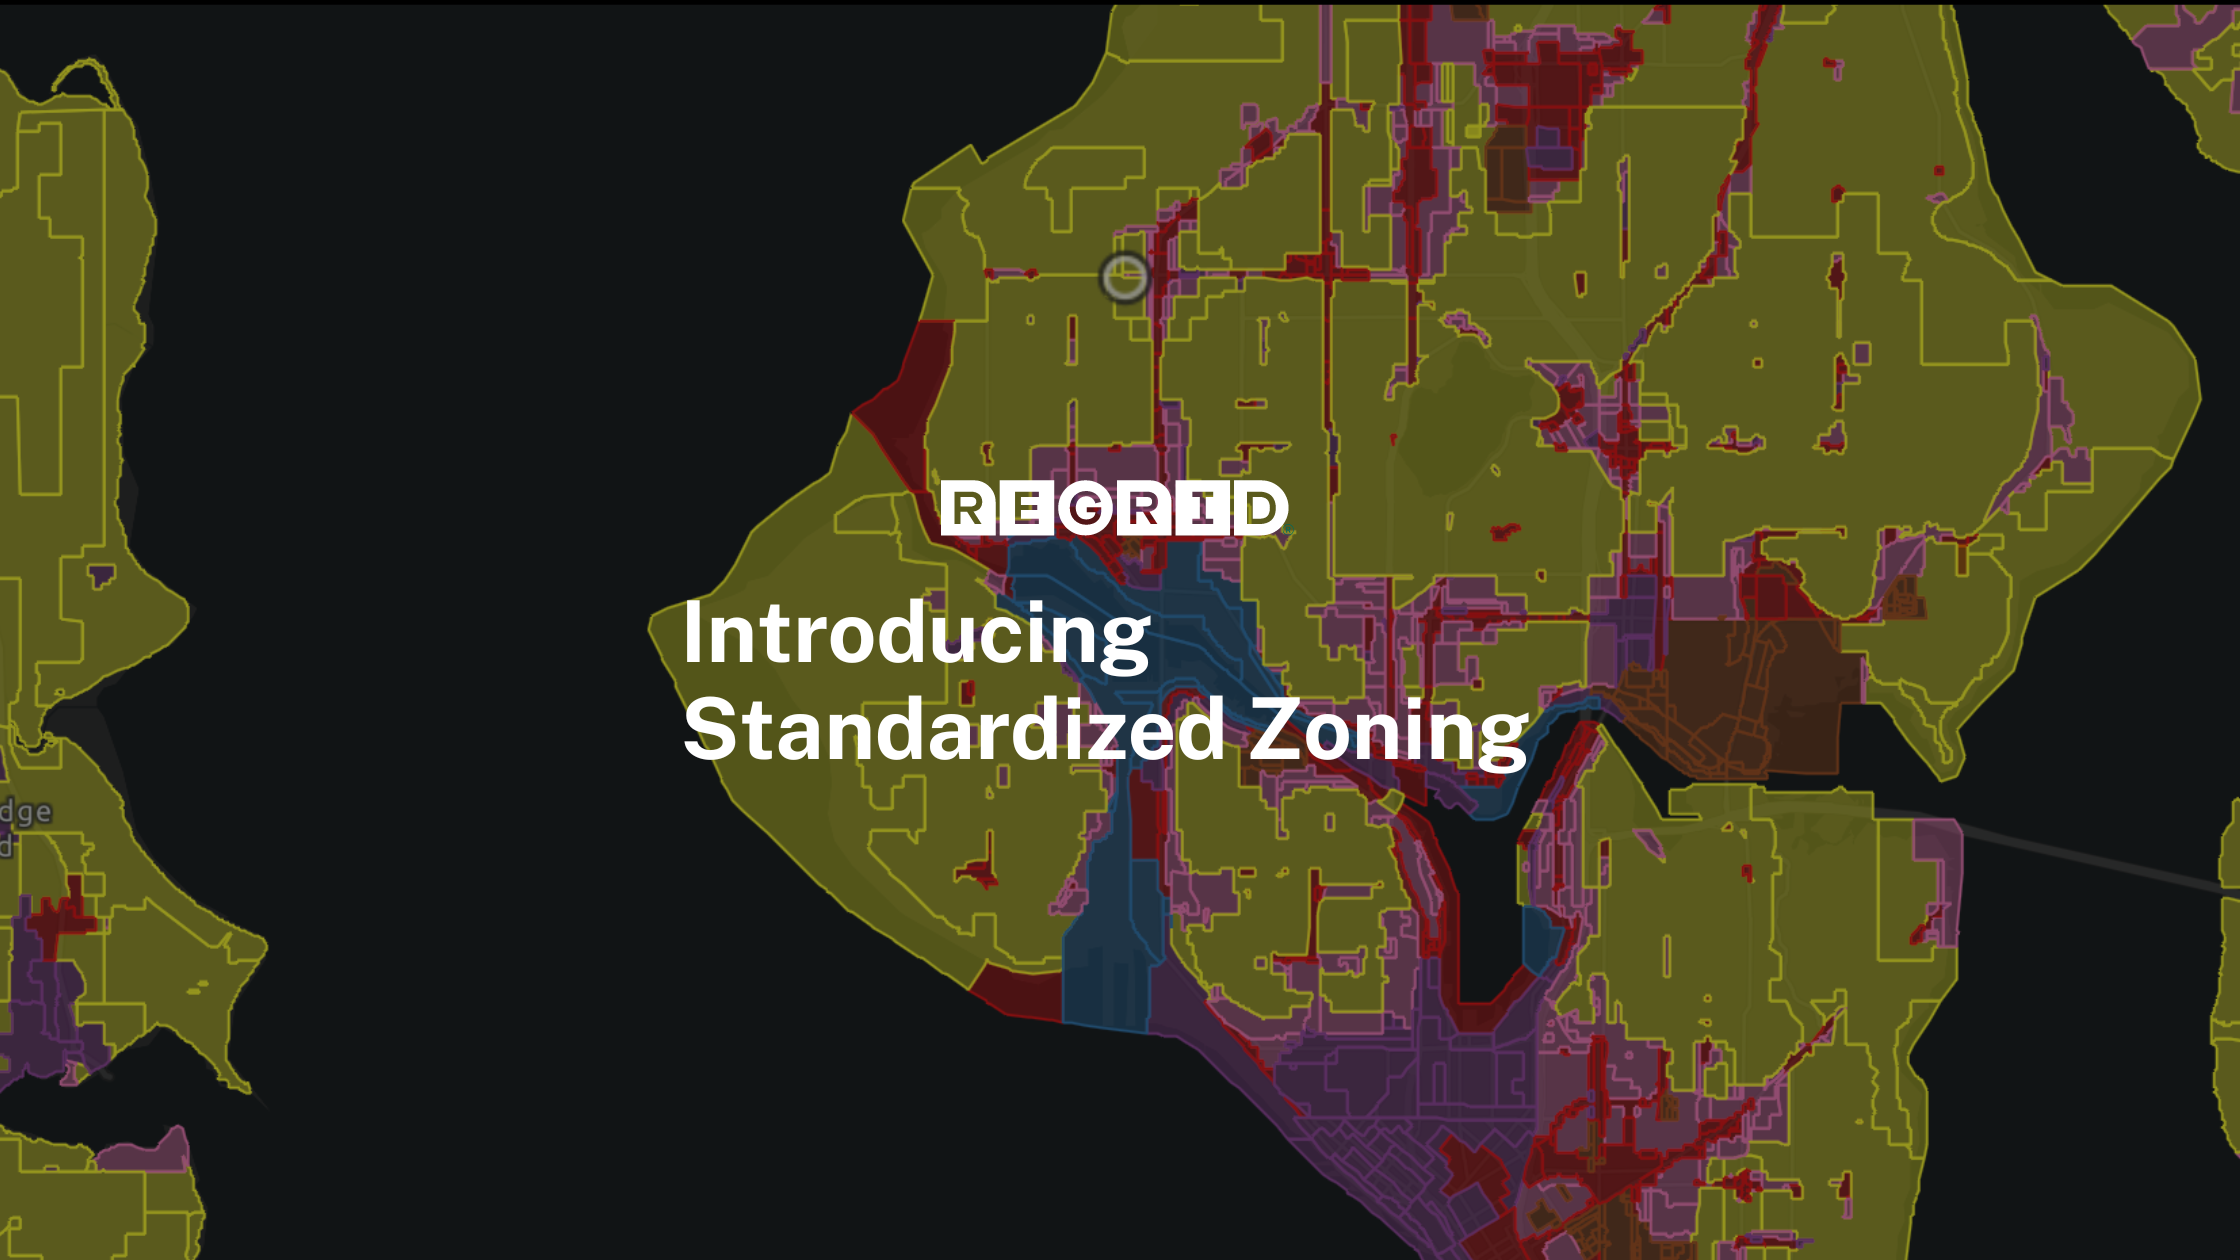 Introducing standardized zoning